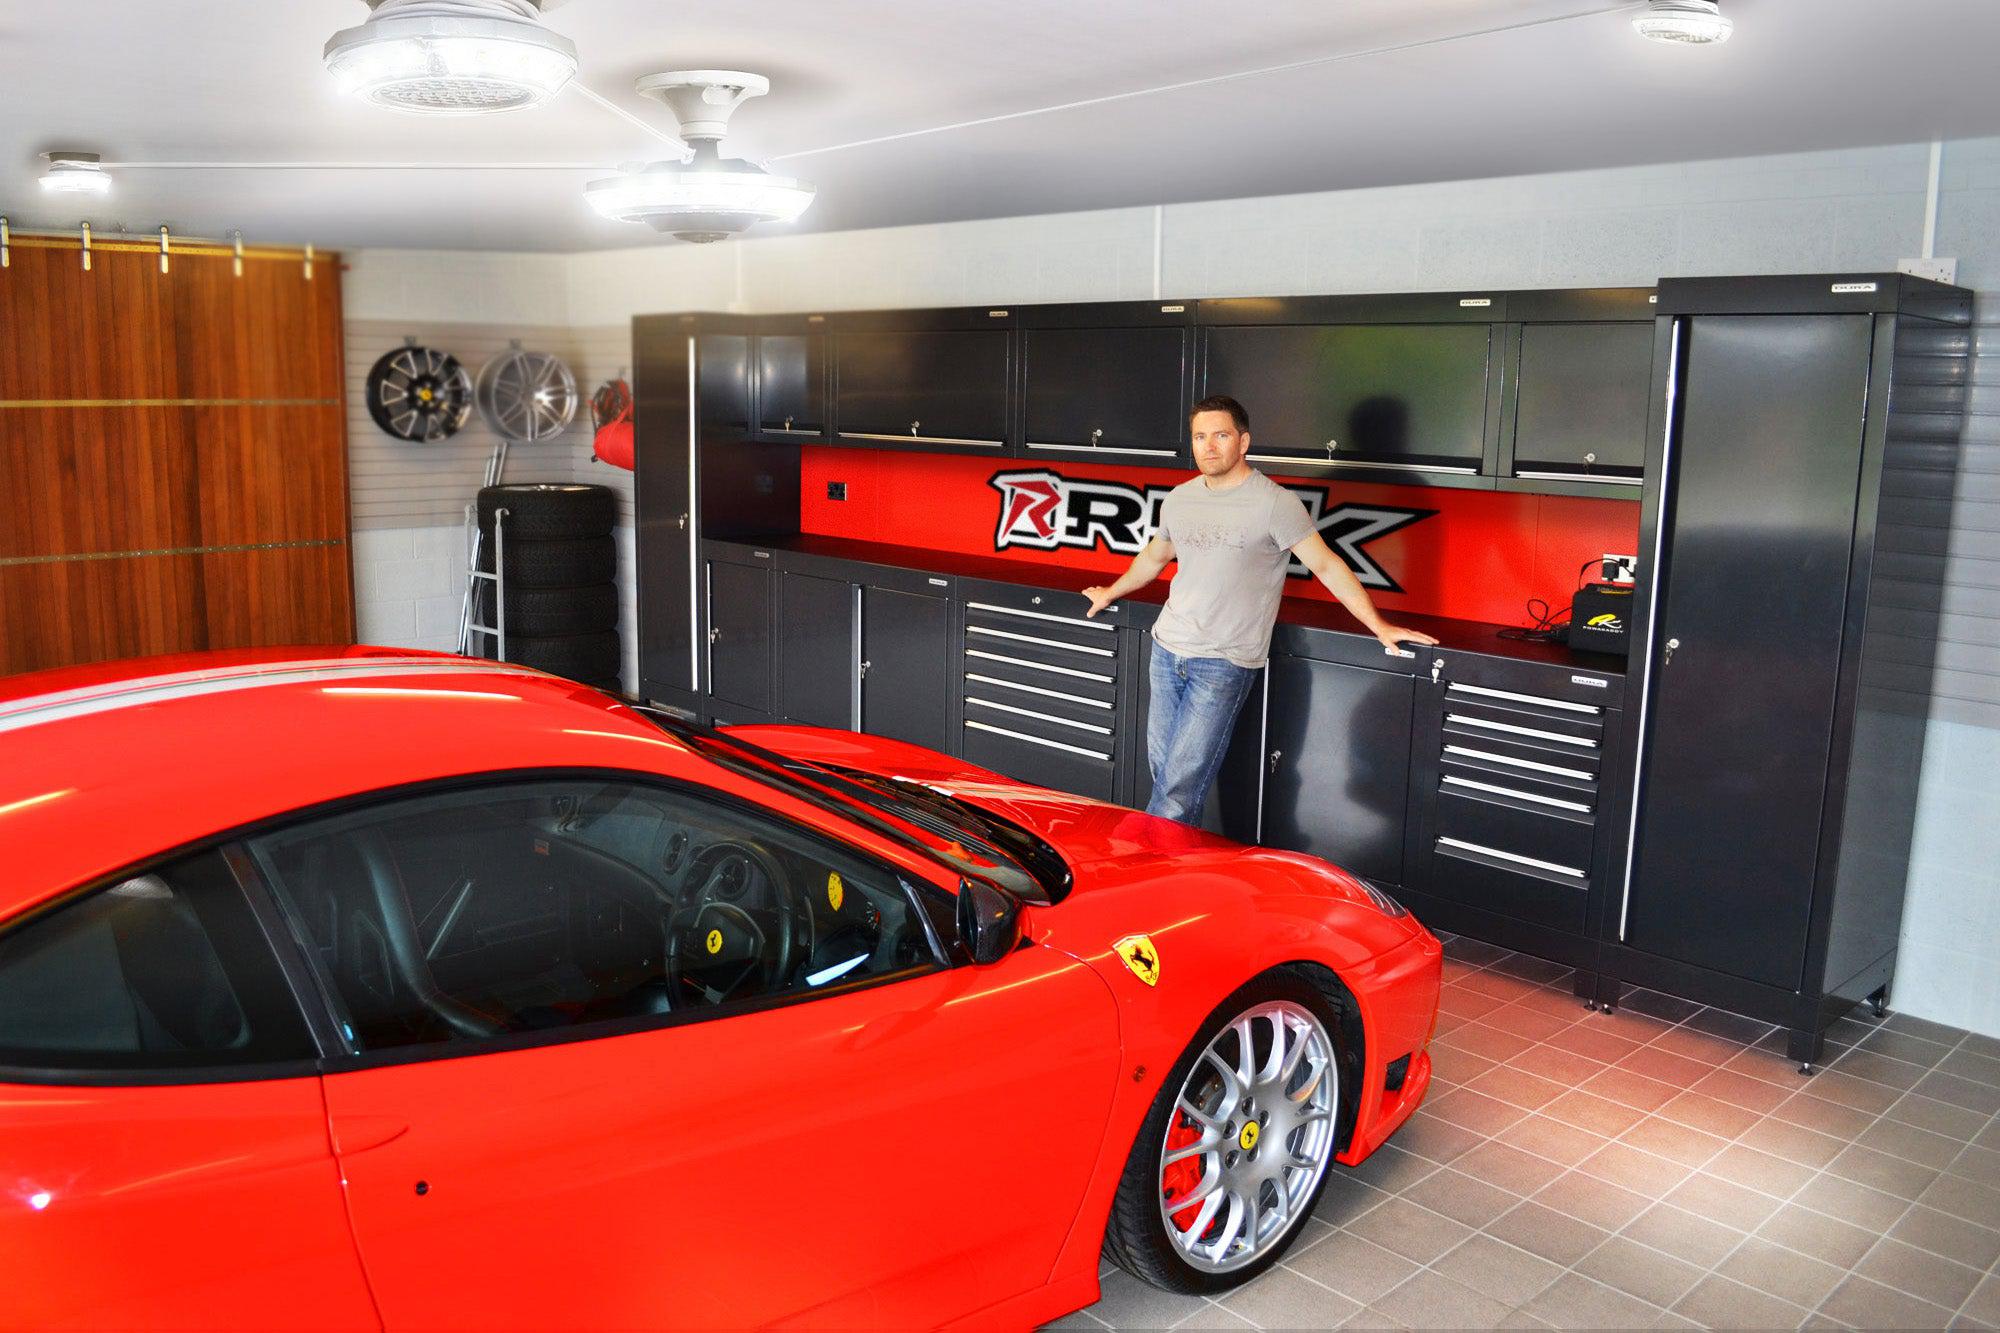 Red Ferrari parked in a nice garage under an MPI full garage lighting system